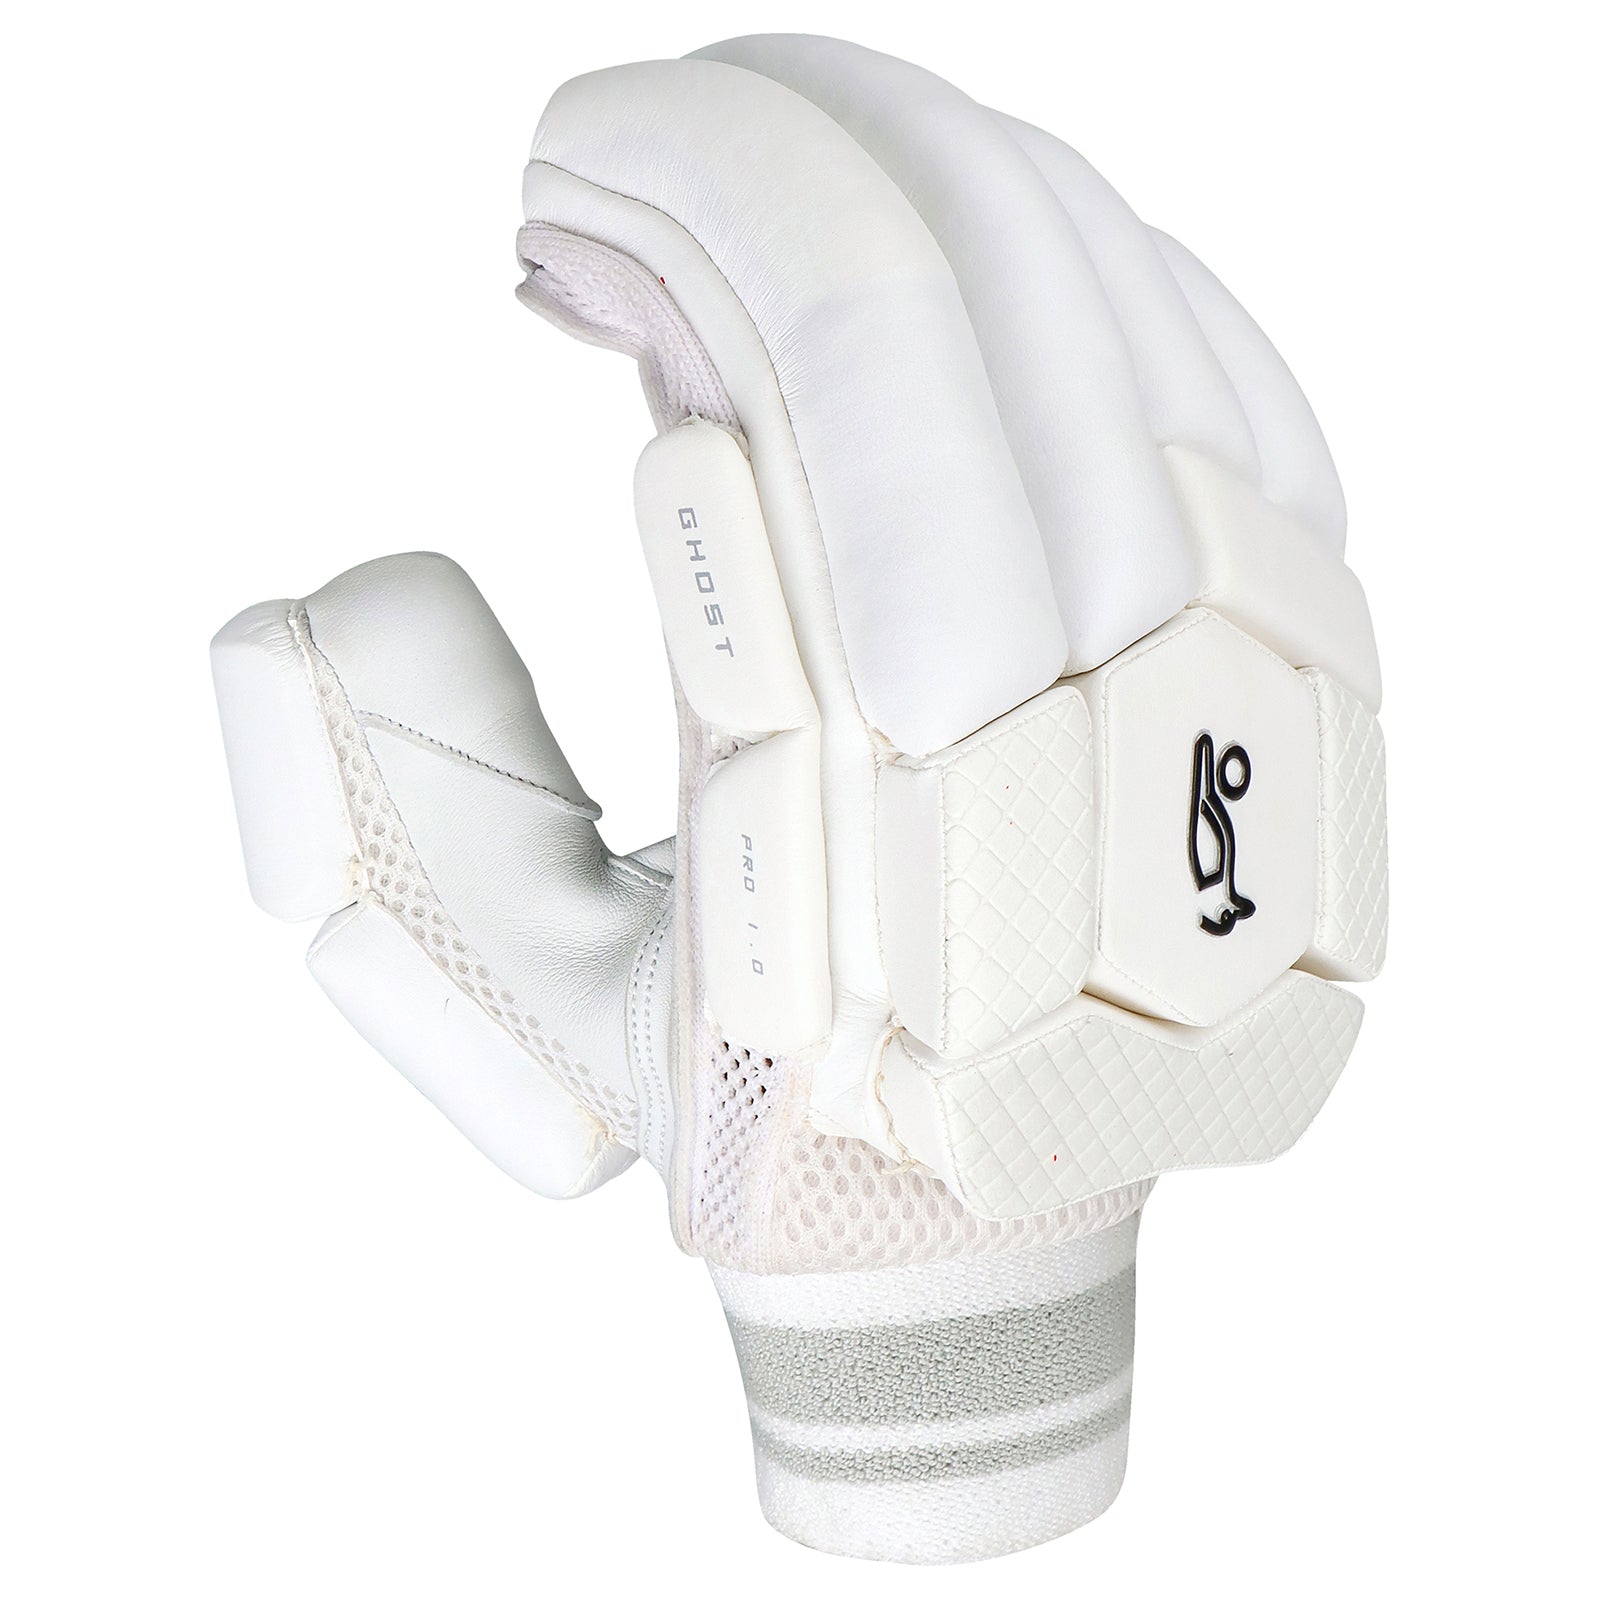 Kookaburra Ghost Pro 1.0 Batting Gloves - Senior